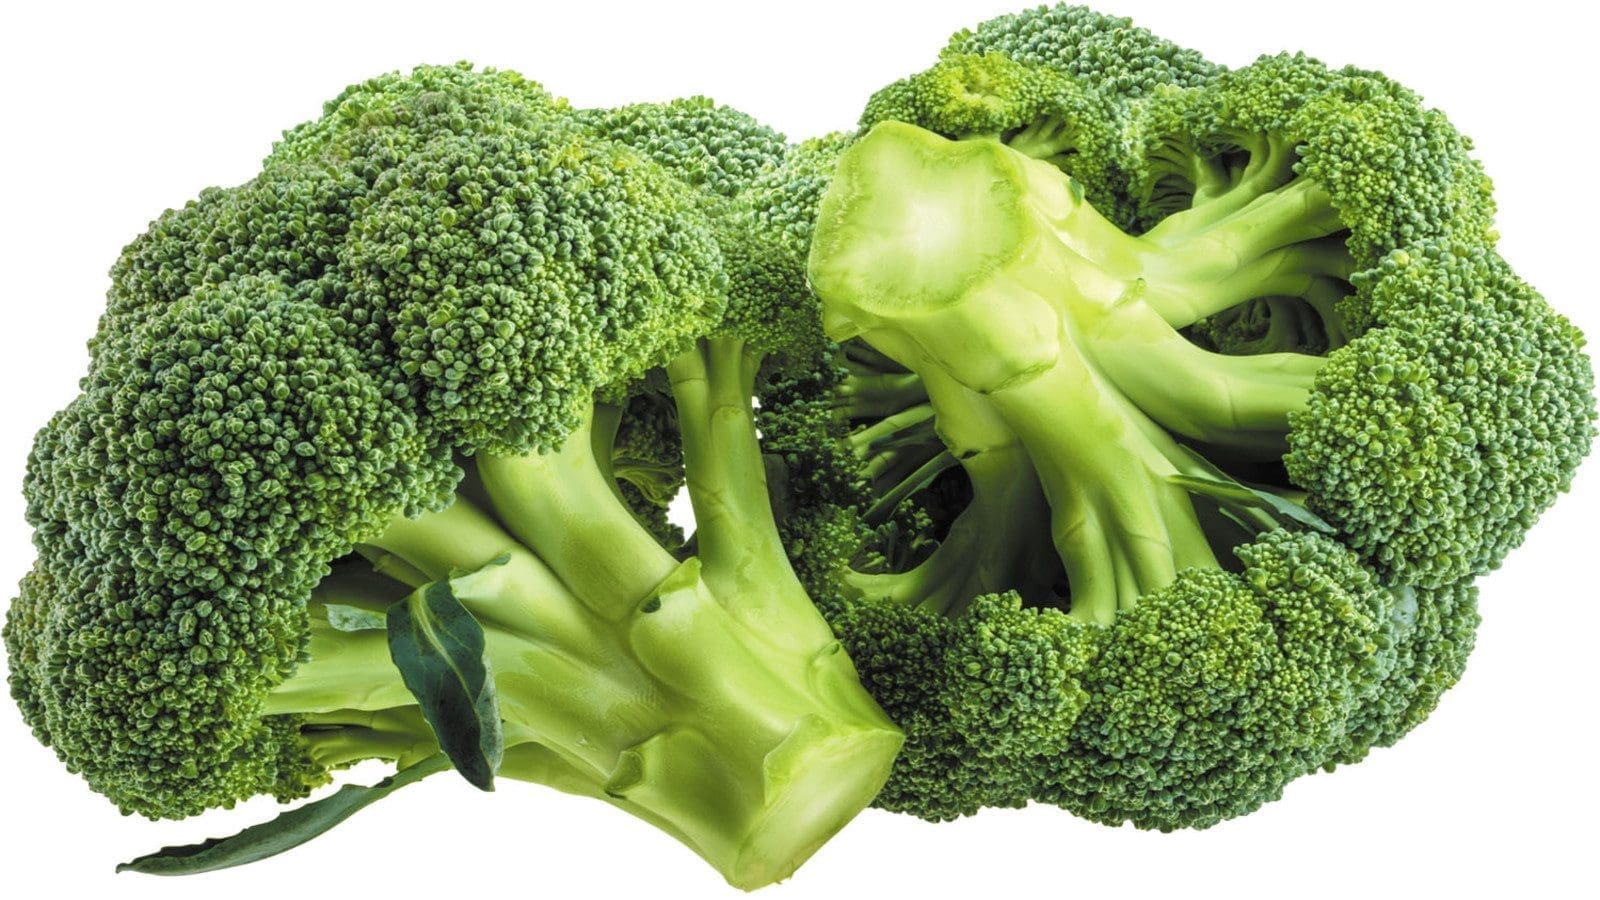 Scientists identify genes to prolong broccoli shelf life